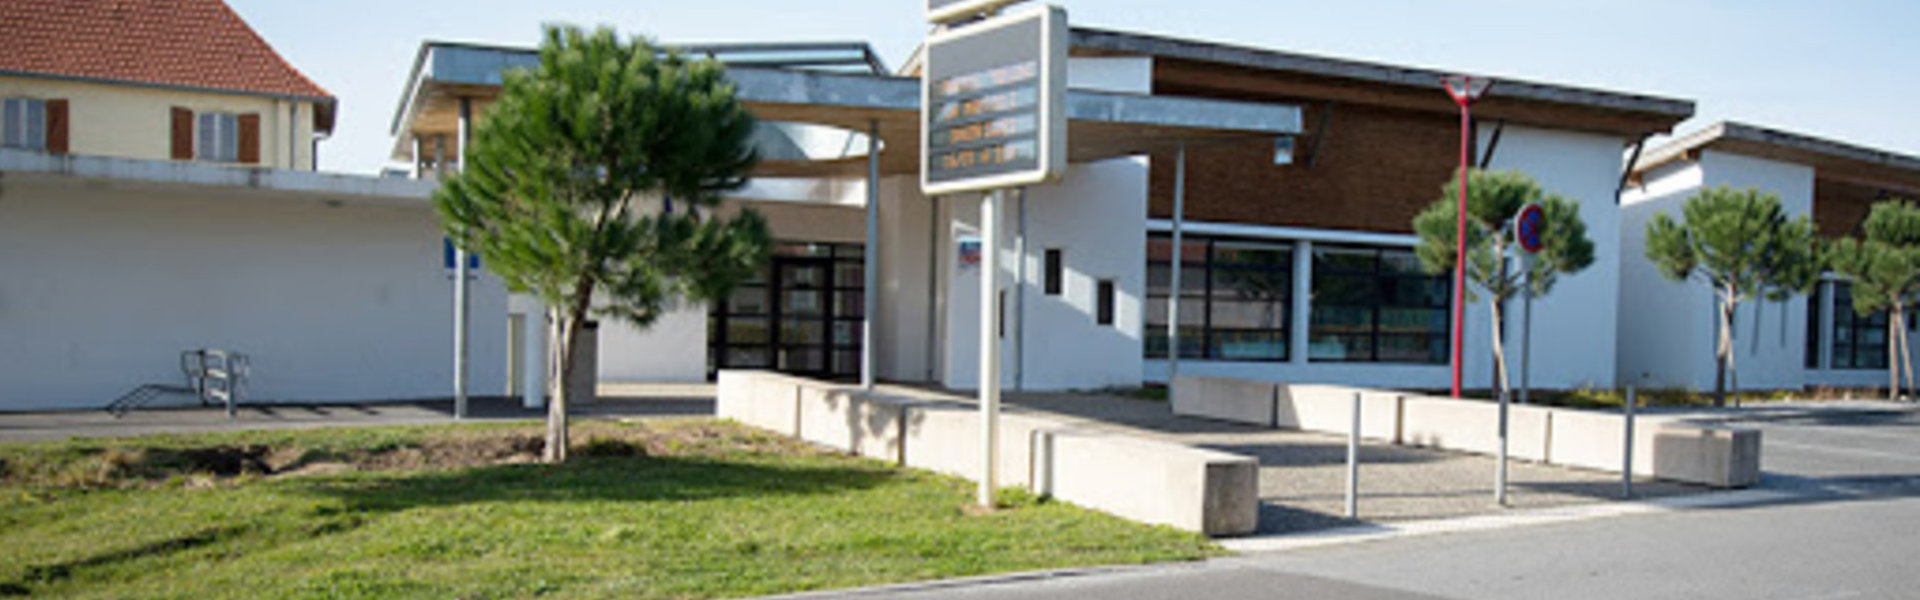 Service Public Mairie Commune Landes Aquitaine 40